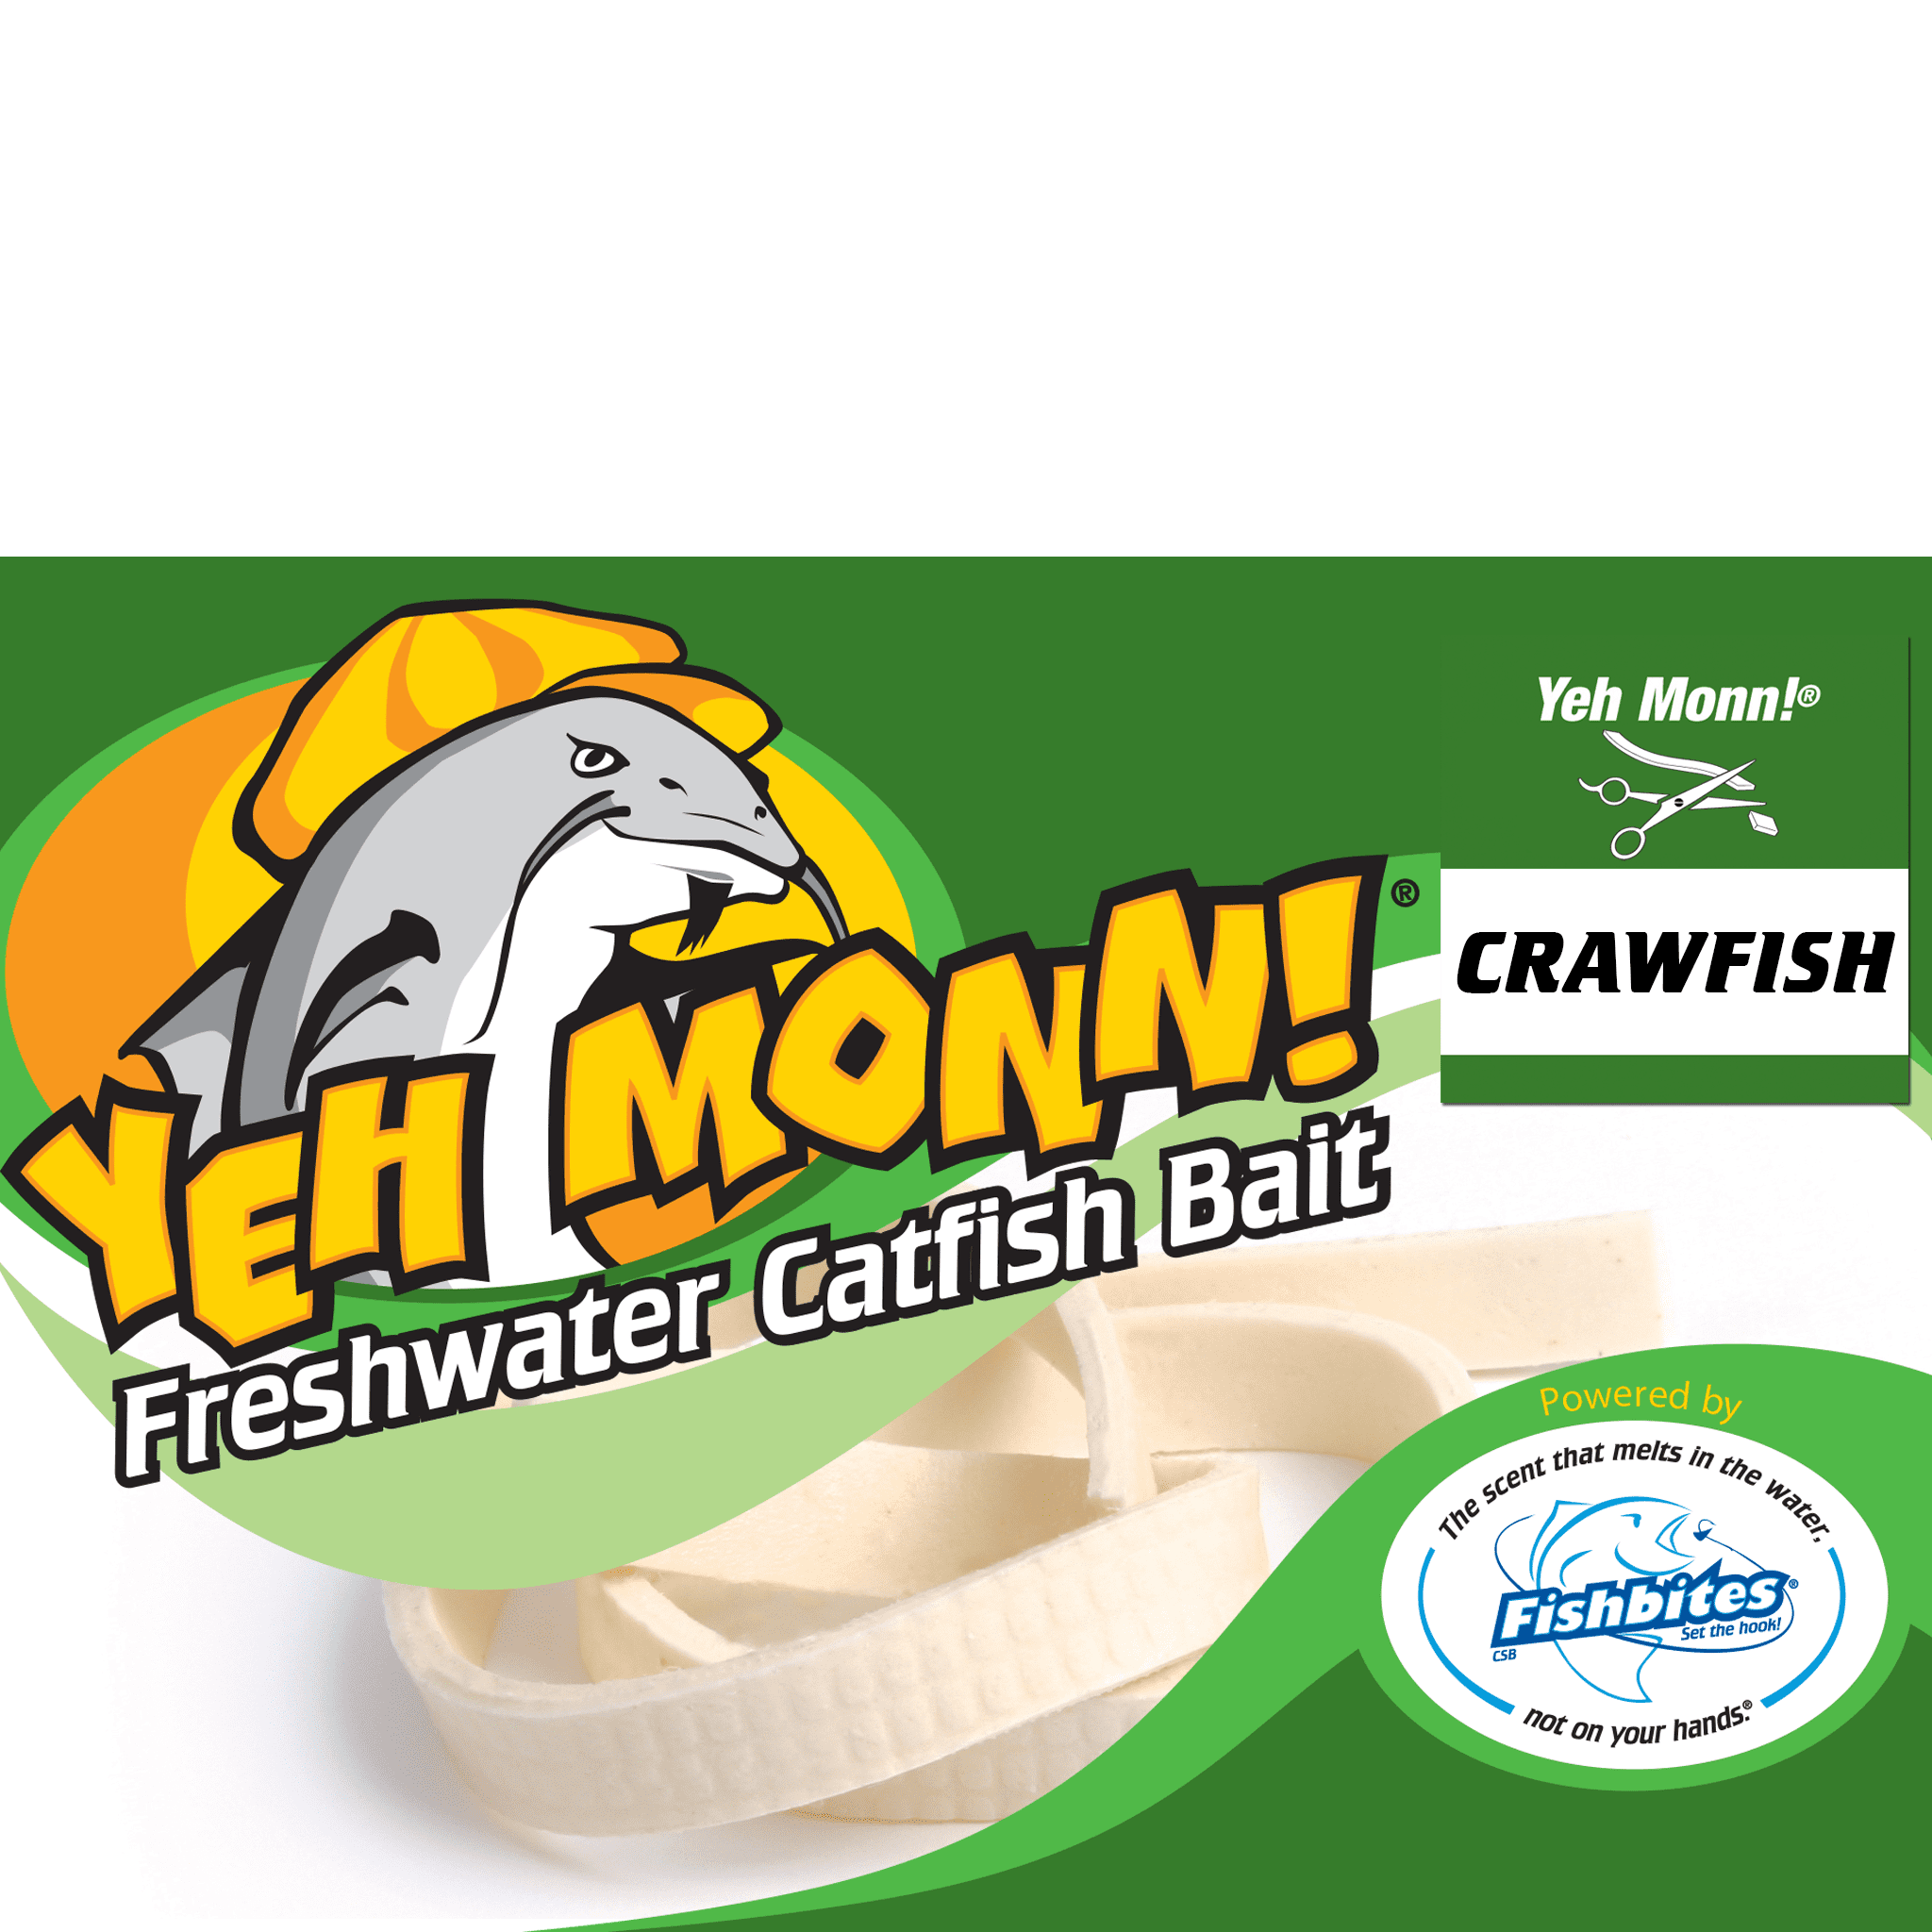 Fishbites Crawfish Yeh Monn! Catfish Bait